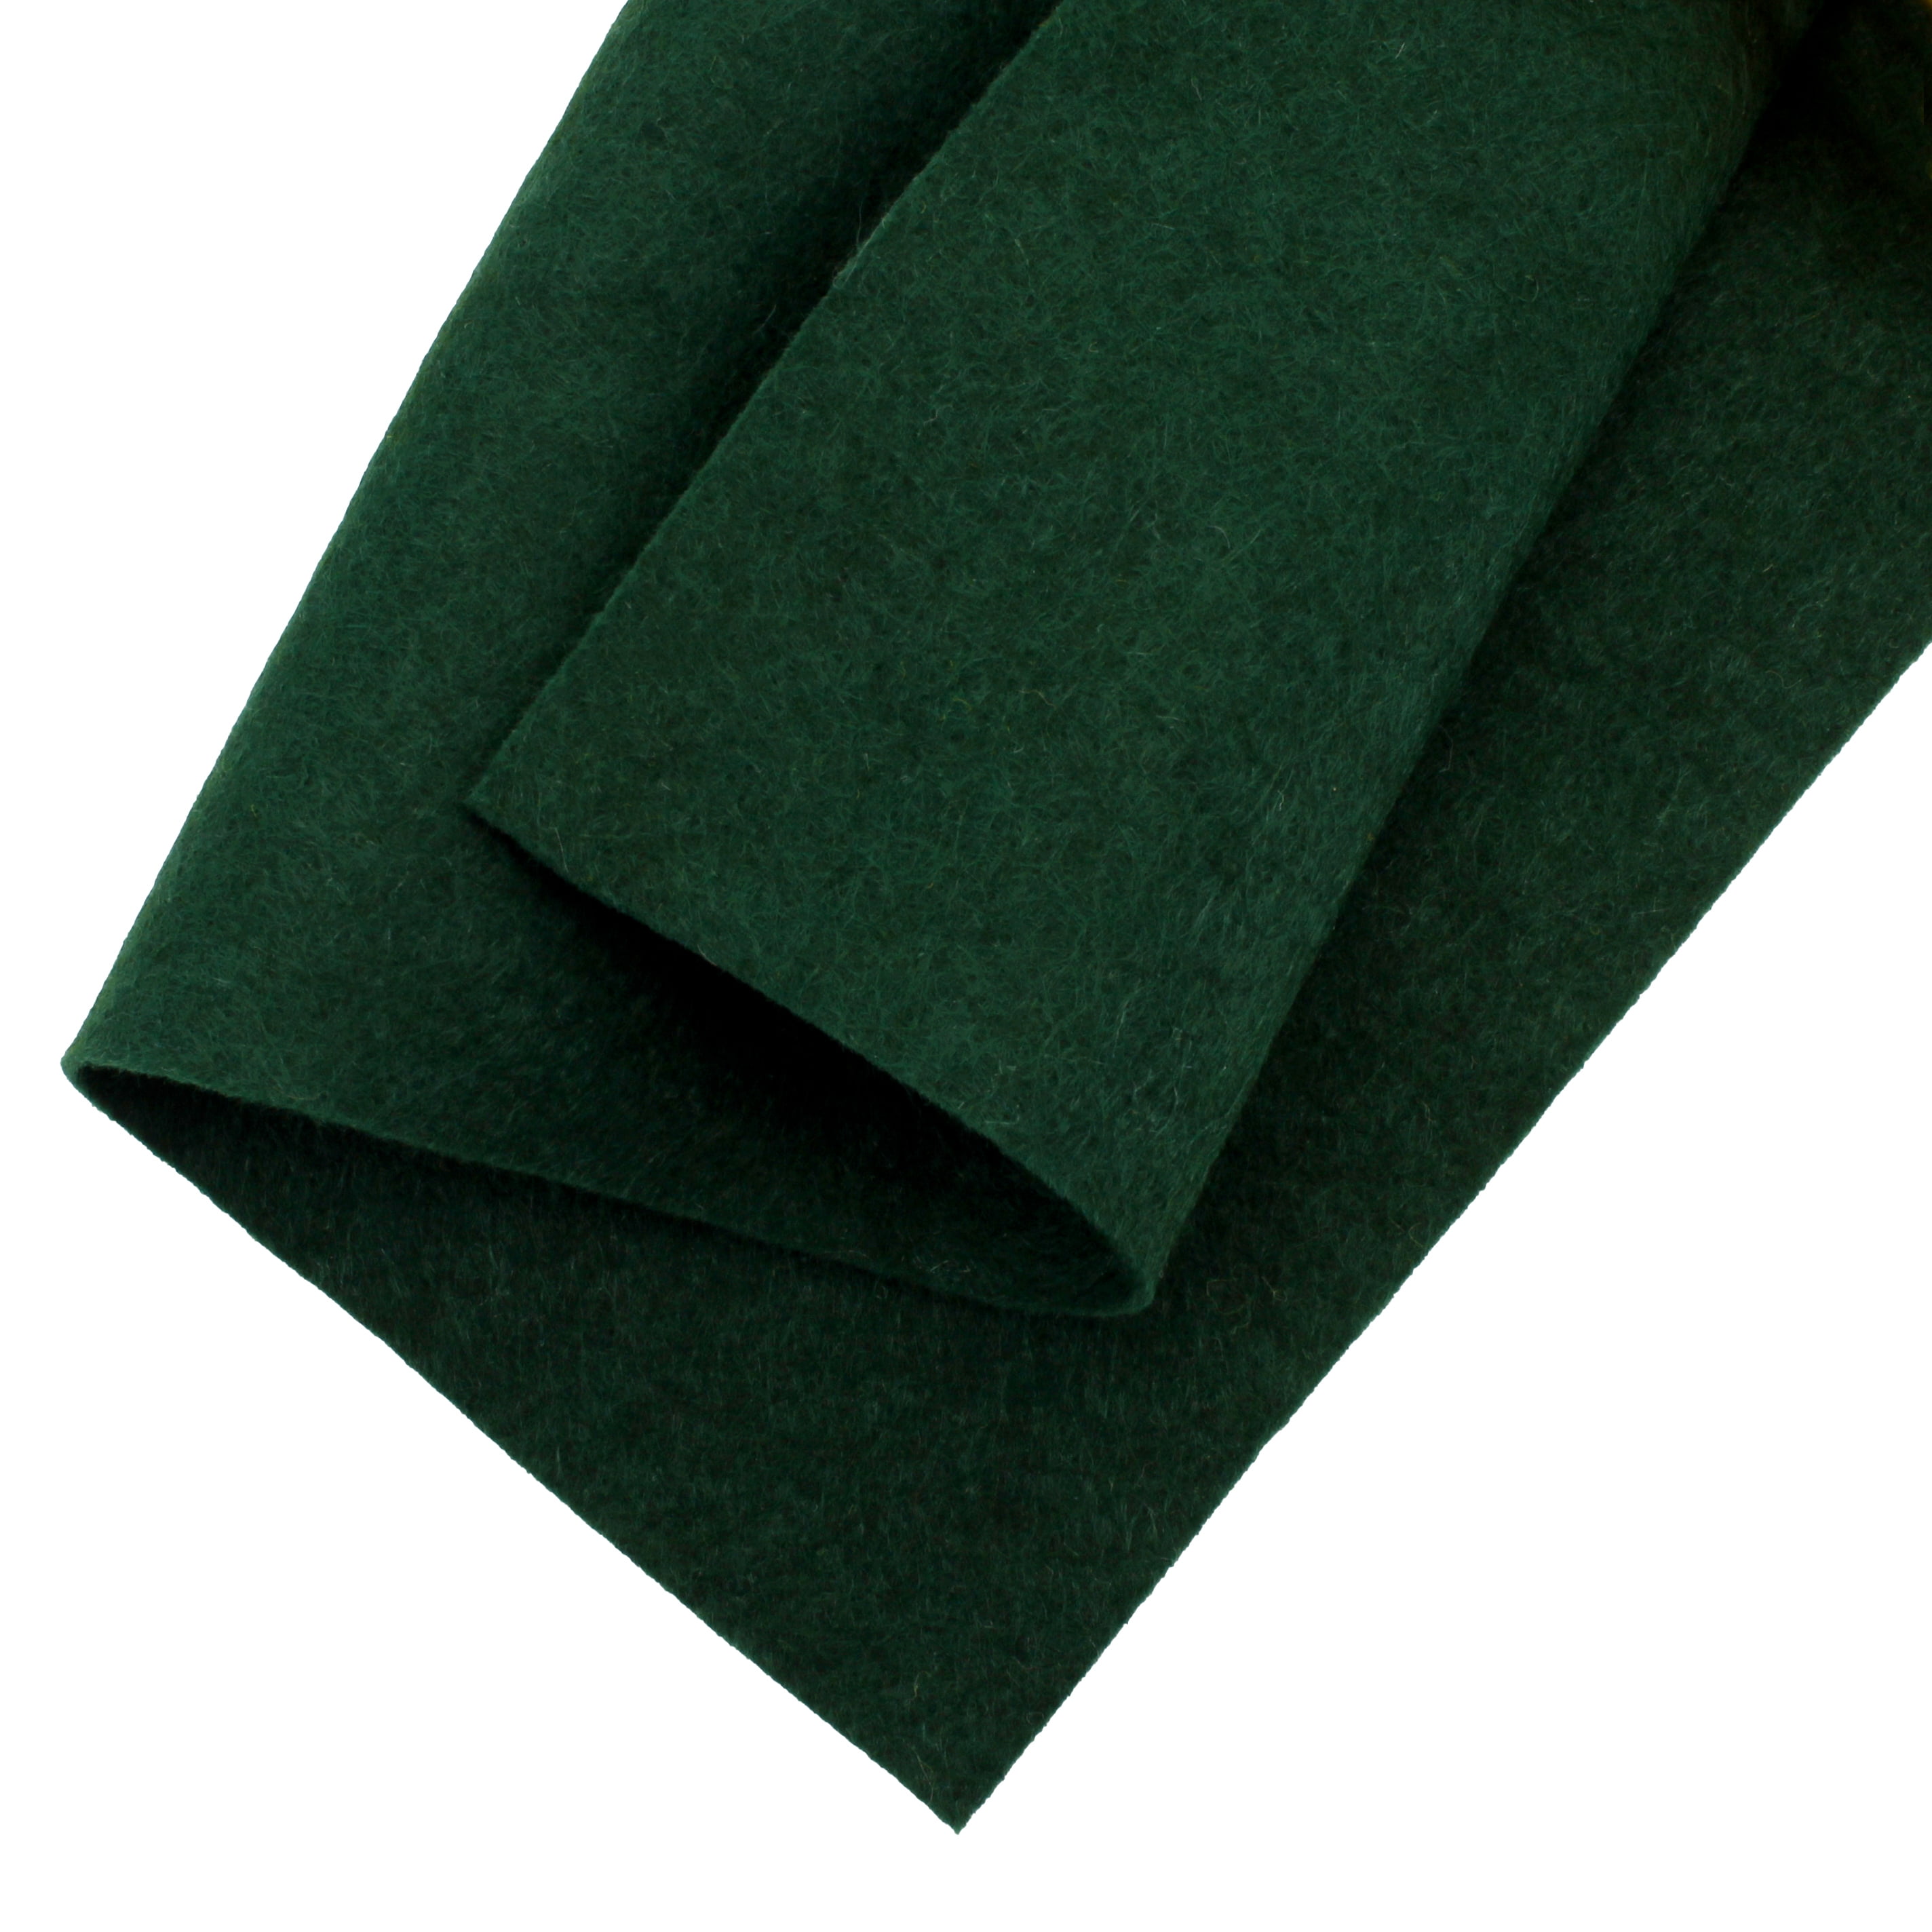 Thick Felt // Conifer Green // 3mm Merino Wool Felt Sheets, Bag